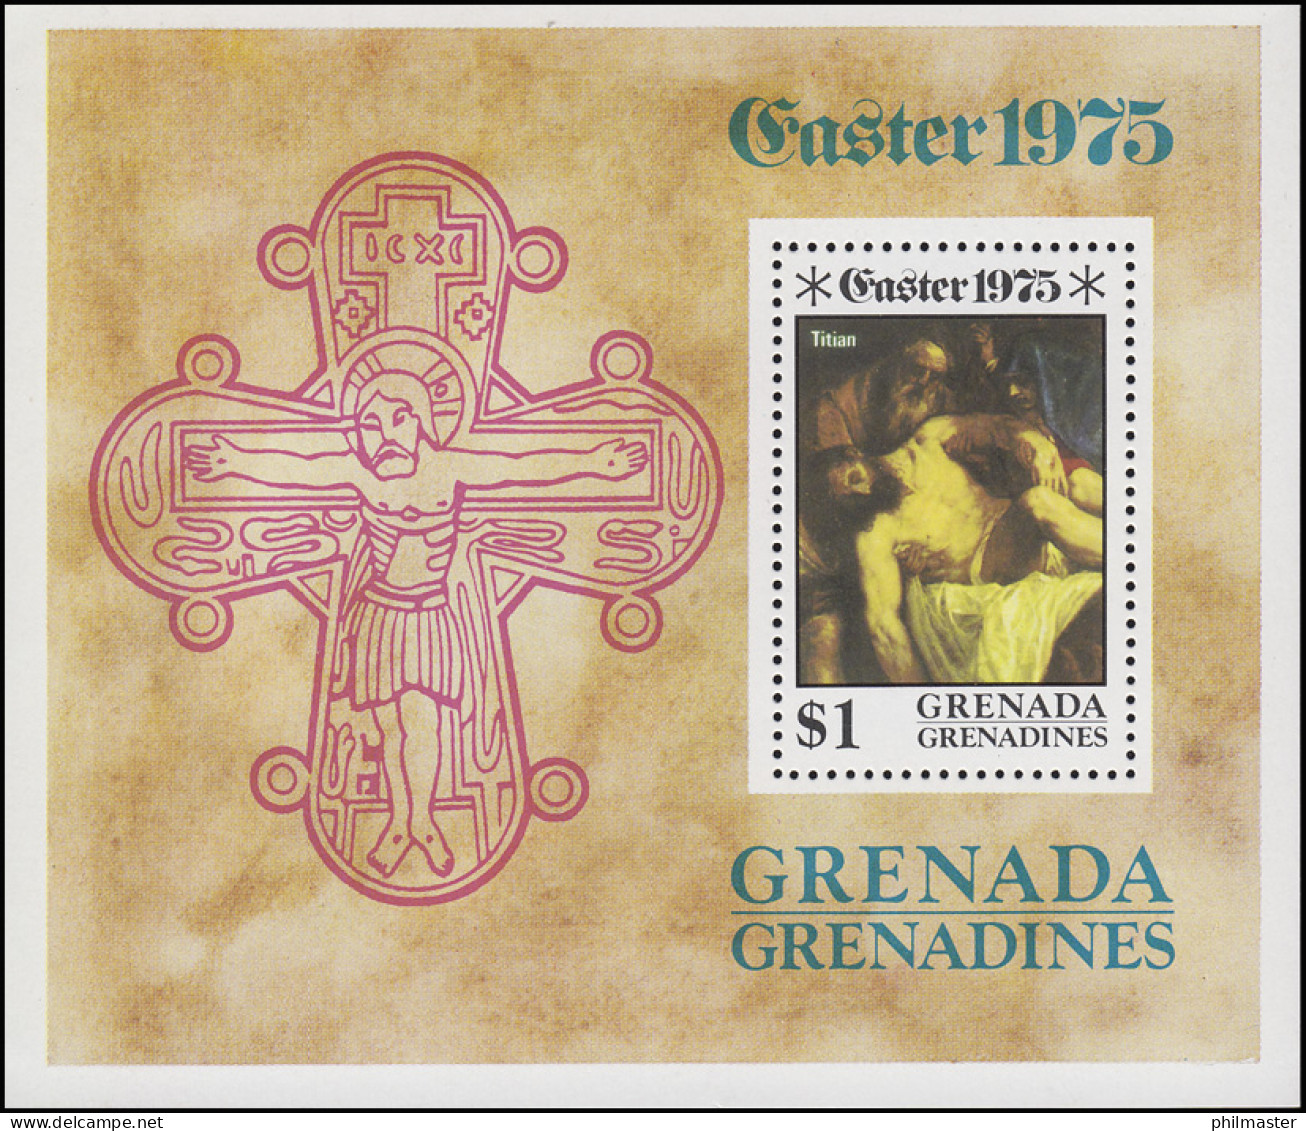 Grenadines: Ostern Easter - Die Kreuzigung Christi 1975, Block ** - Christentum